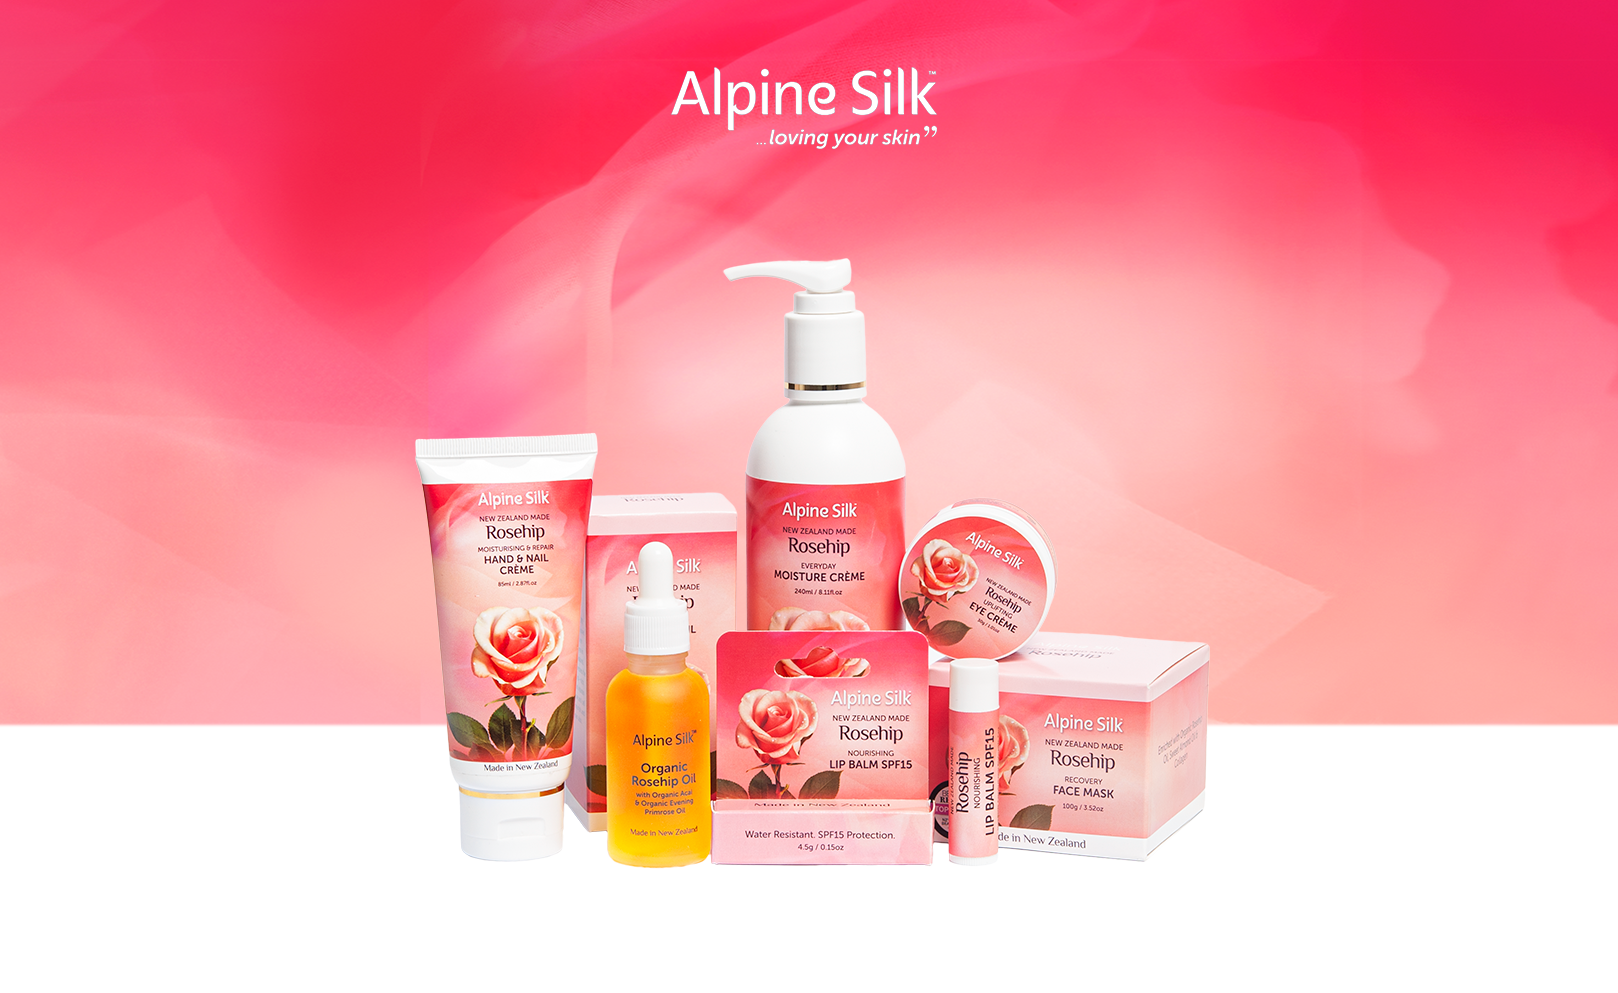 Alpine Silk Rosehip product display